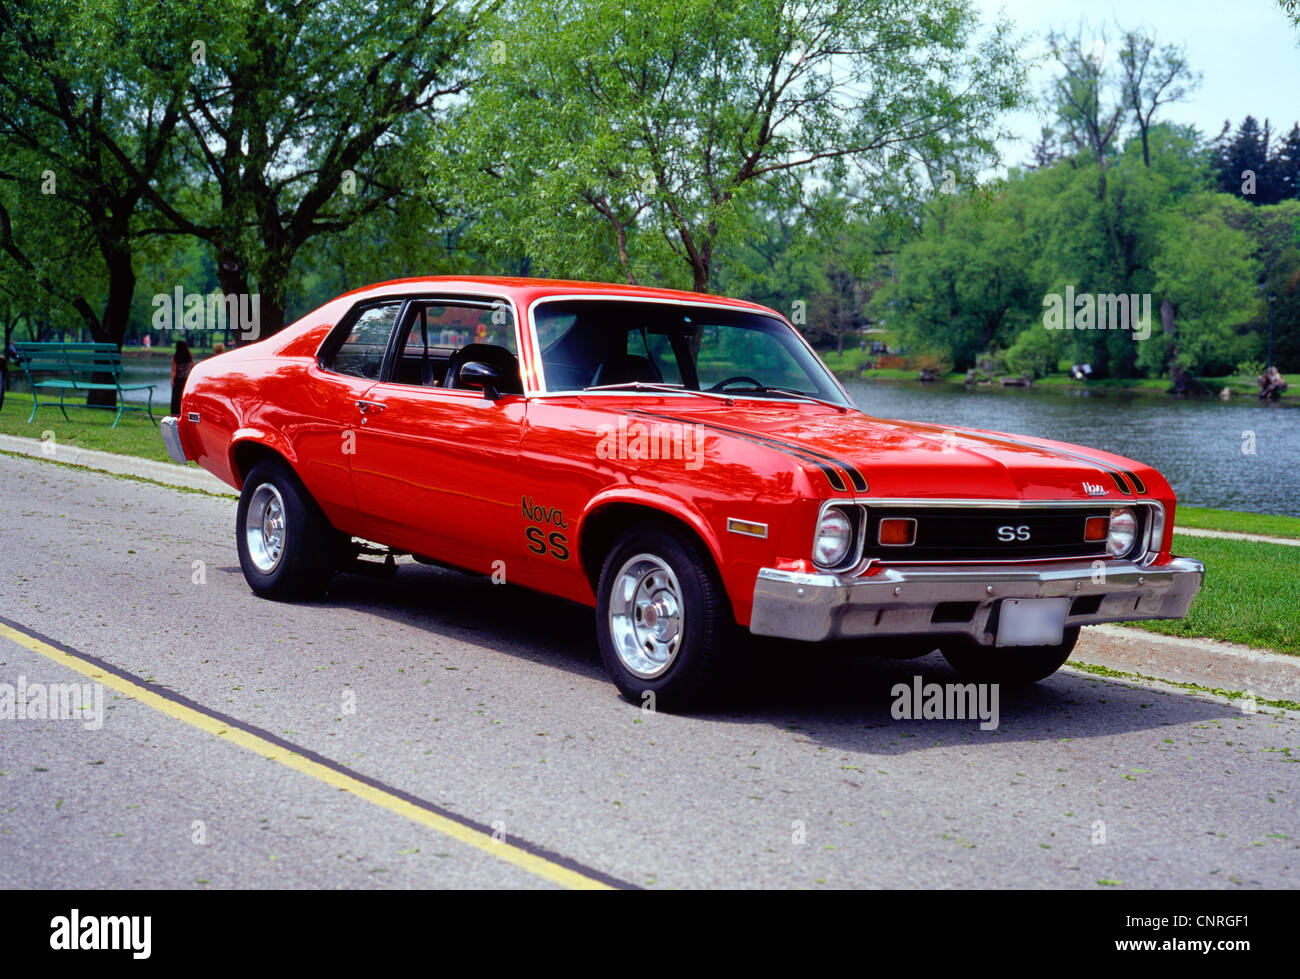 1974 Chevrolet Nova SS Foto stock - Alamy